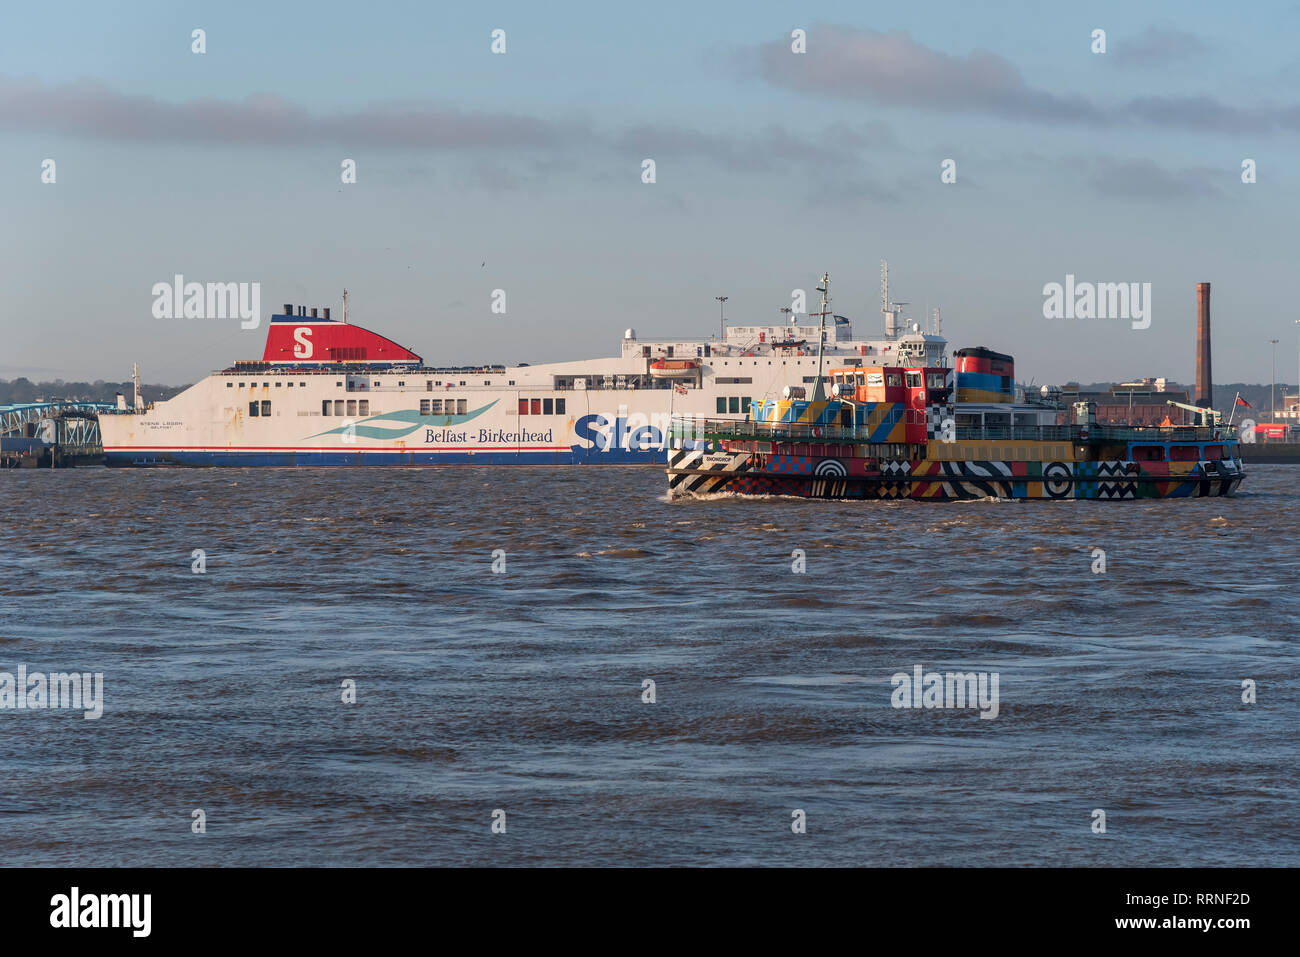 Mersey ferry Snowdrop. Dazzle ferry. Stock Photo